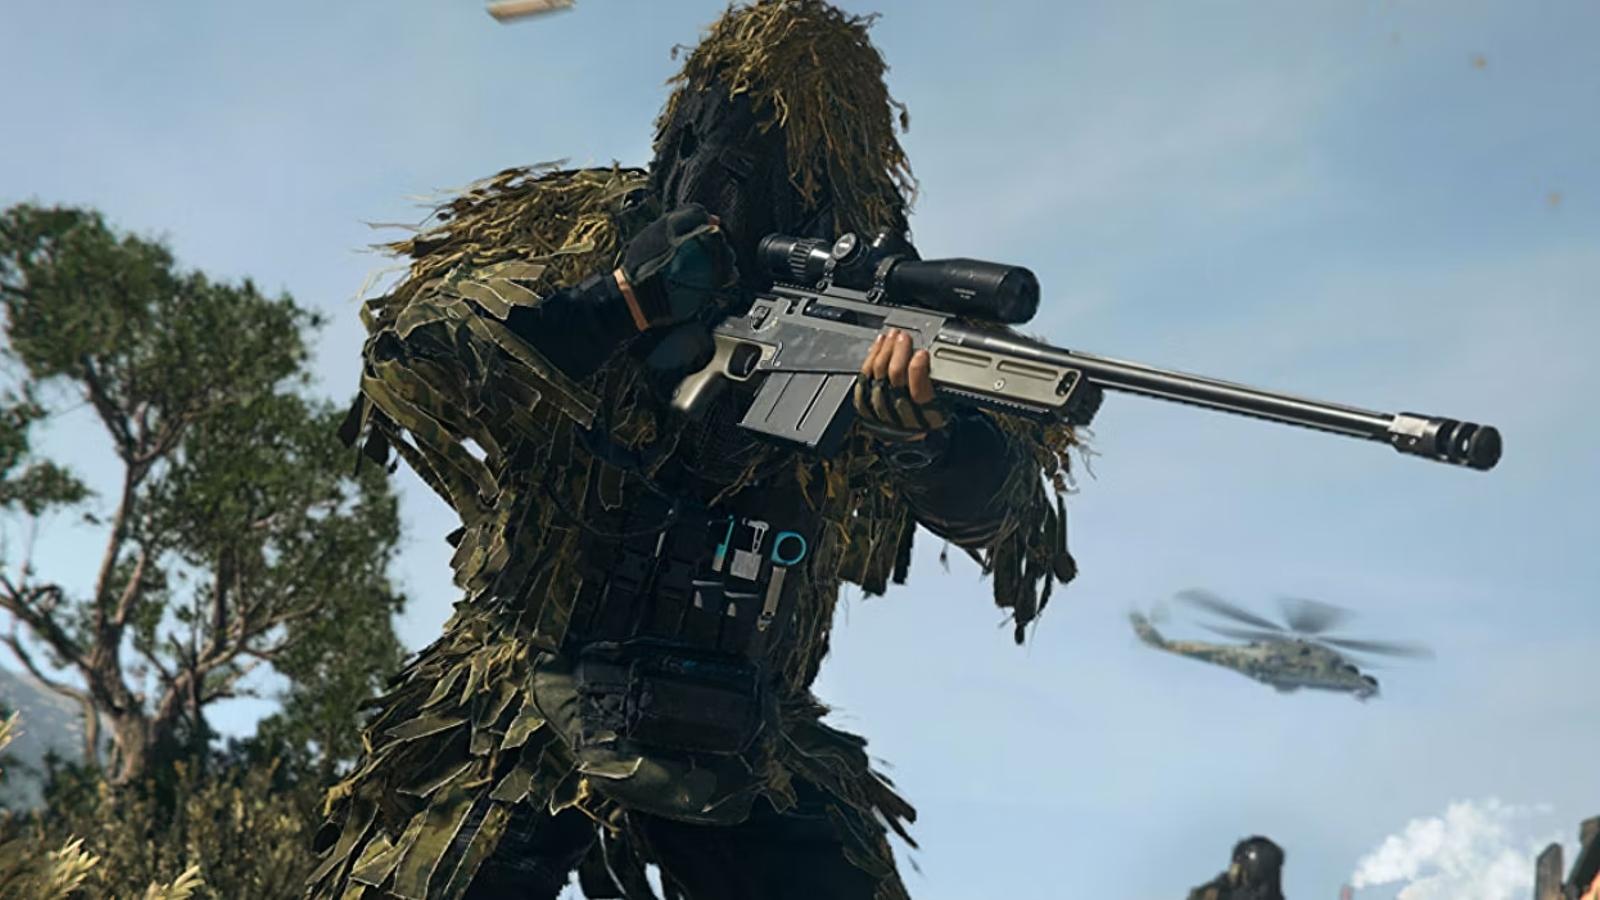 Warzone operator using Signal 50 sniper rifle